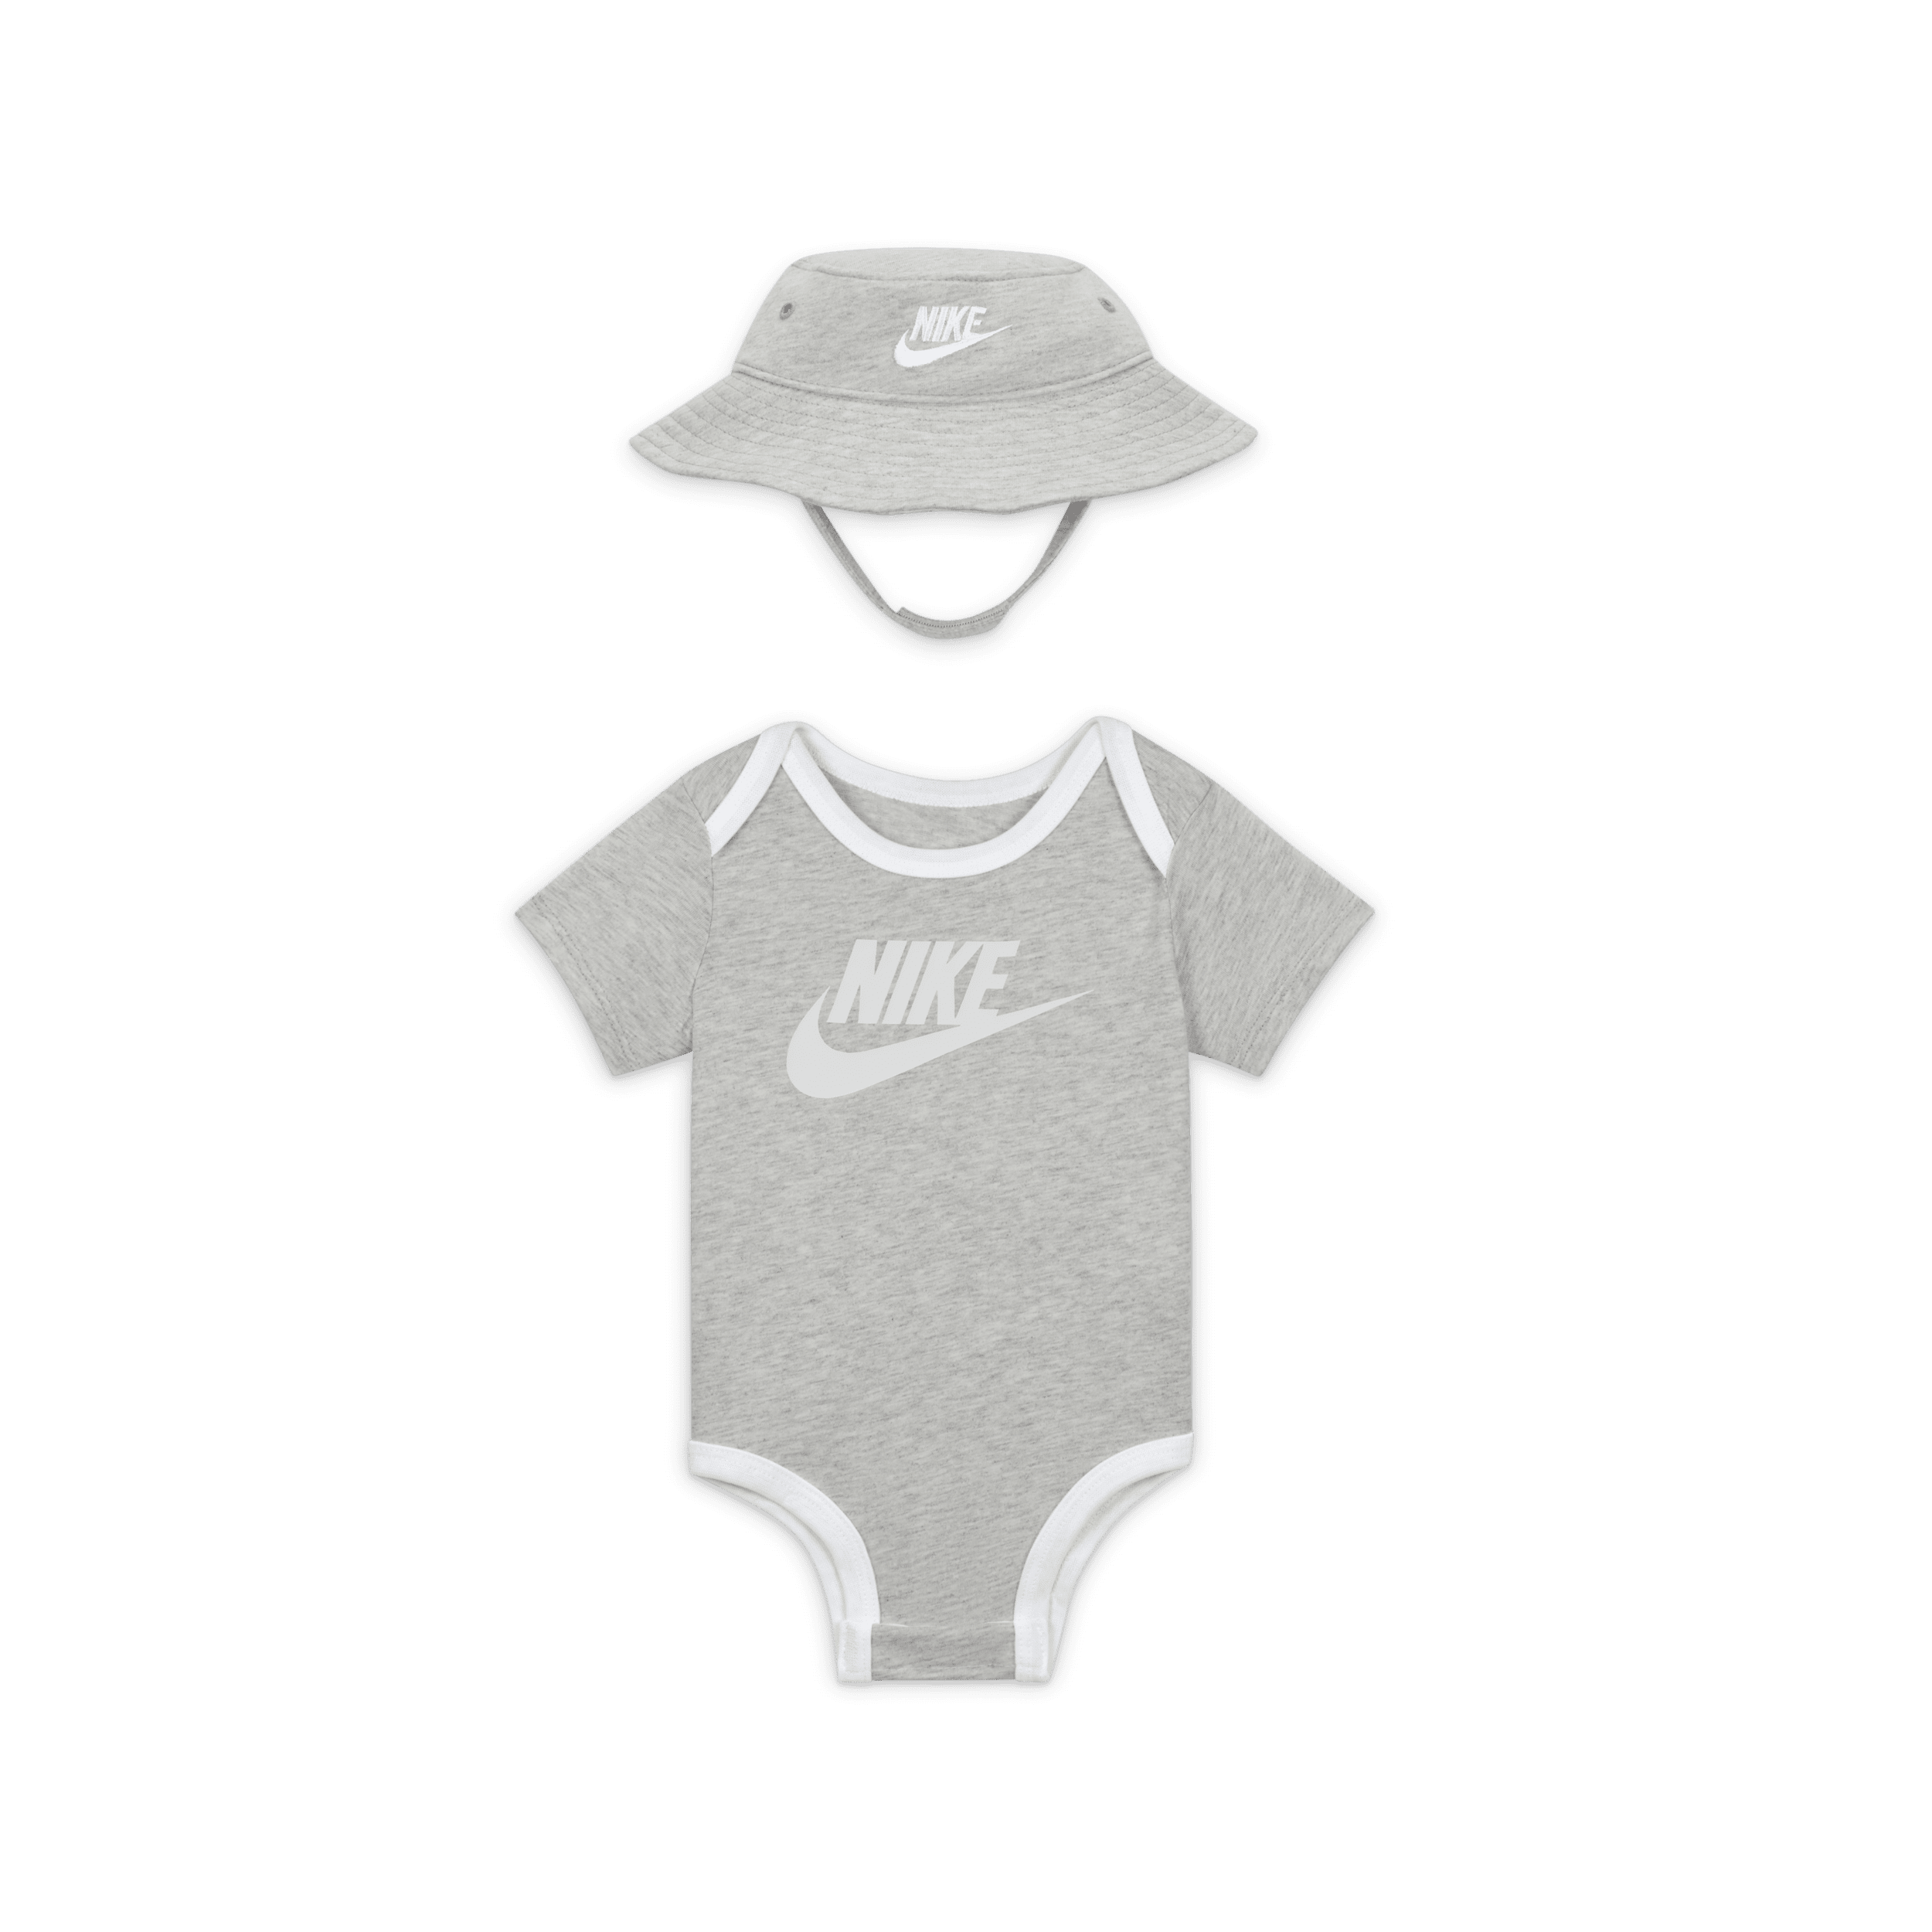 Nike Core-sæt med bøllehat og bodystocking til babyer - grå